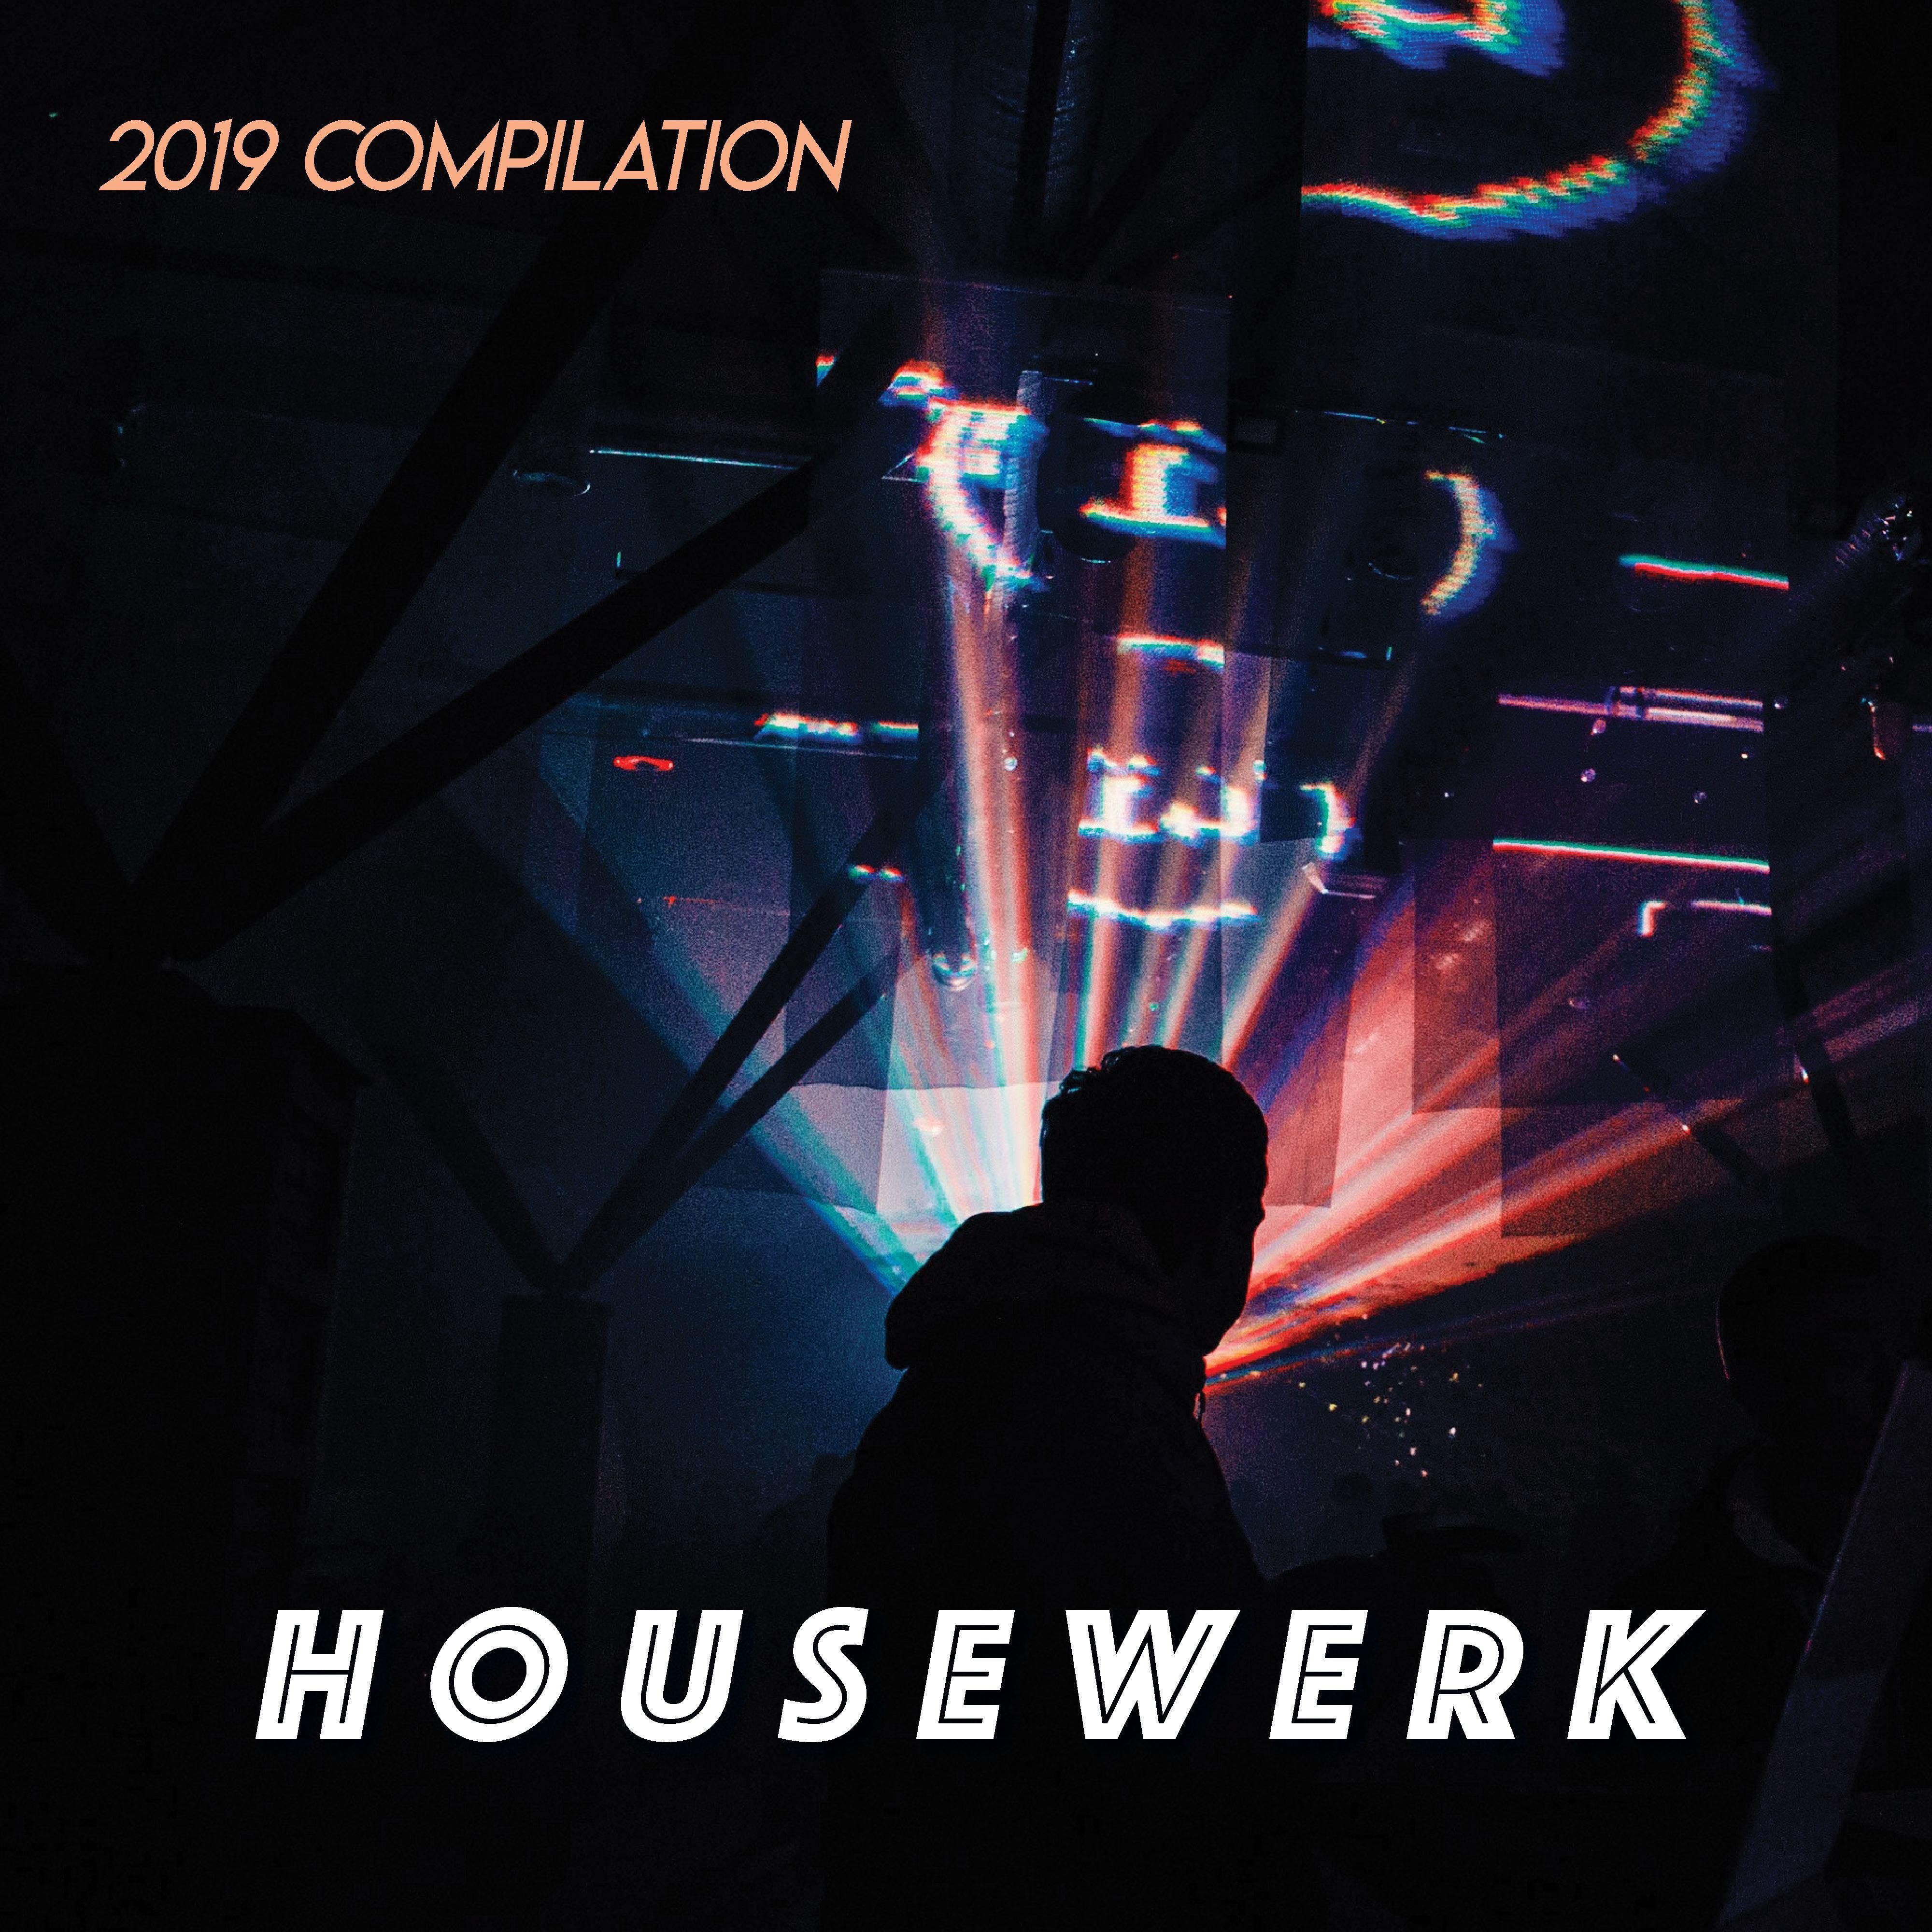 Housewerk / 2019 Compilation